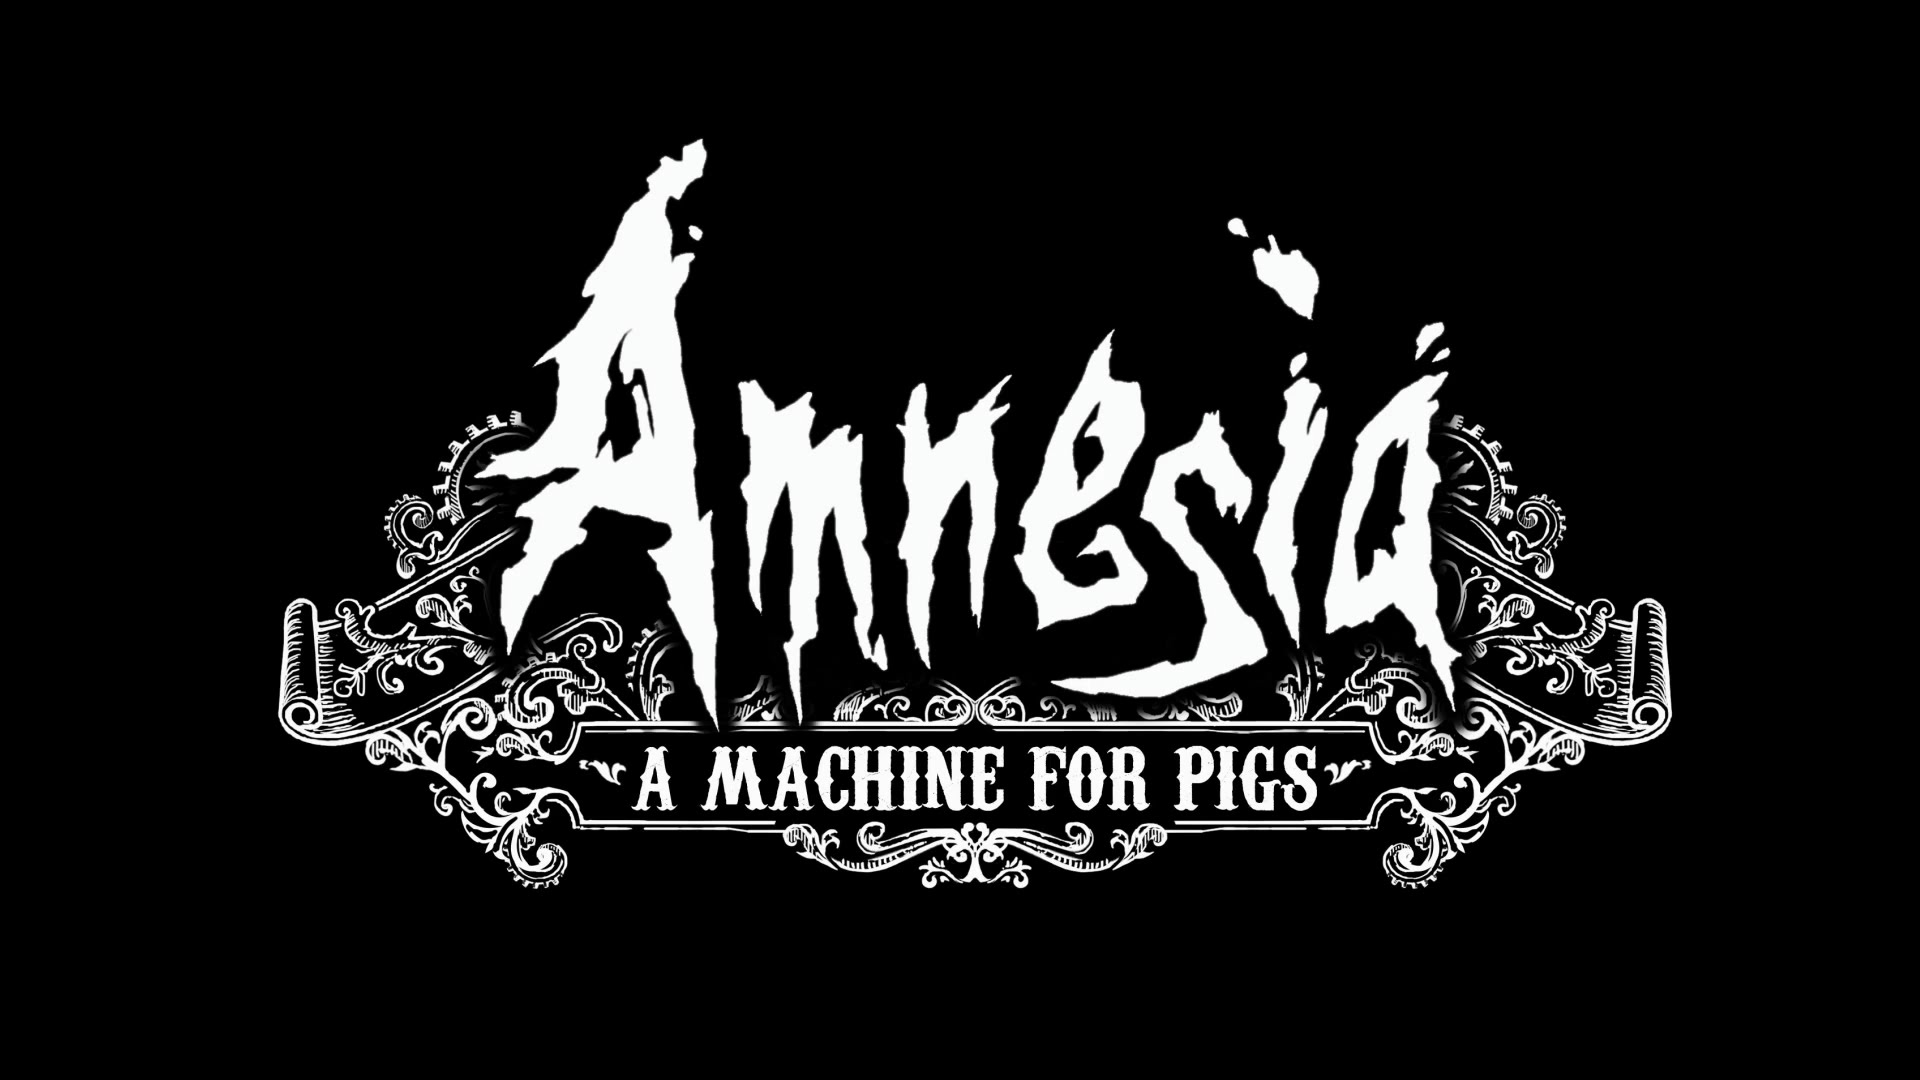 Drenant l'aigua i el malparit invisible. Amnesia: A machine for pigs #12 de La pissarra